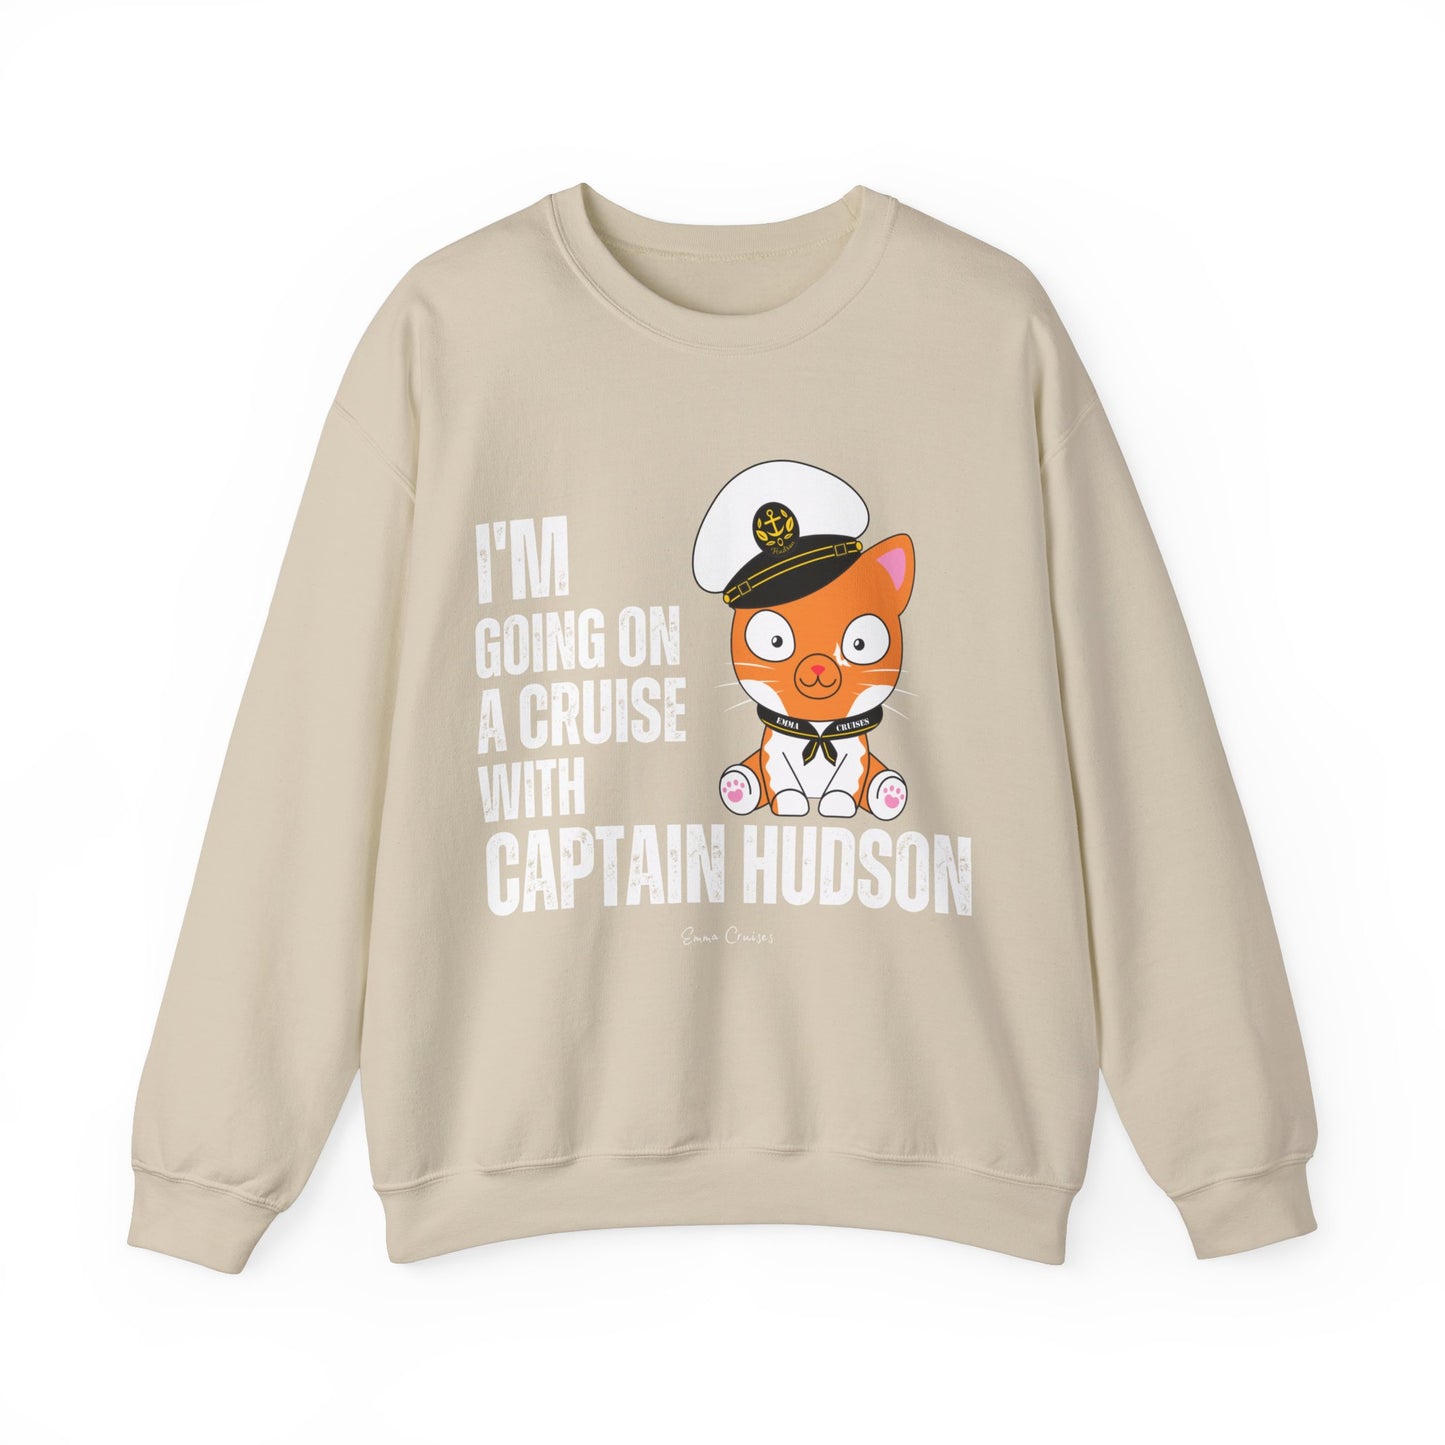 I'm Going on a Cruise with Captain Hudson - UNISEX Crewneck Sweatshirt